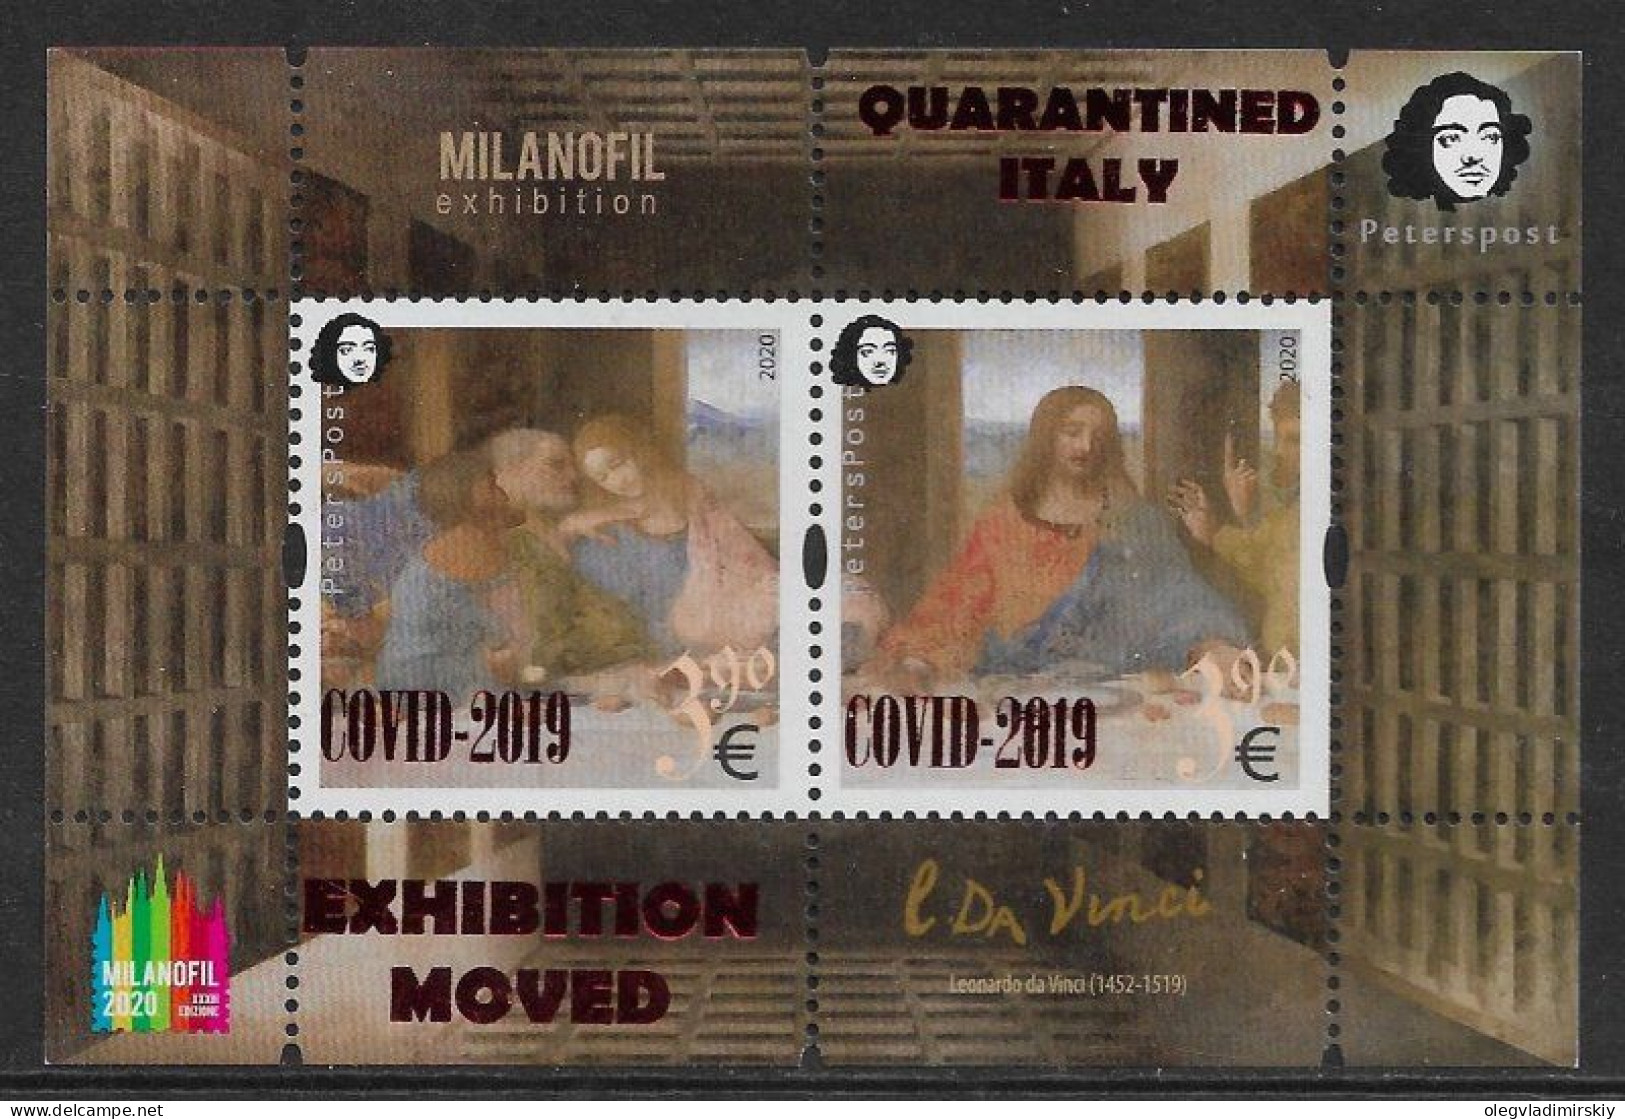 Finland 2020 Quarantined Italy COVID-2019 Leonardo Da Vinci MILANOFIL Exhibition Muved Peterspost Block Overprint MNH - Medizin